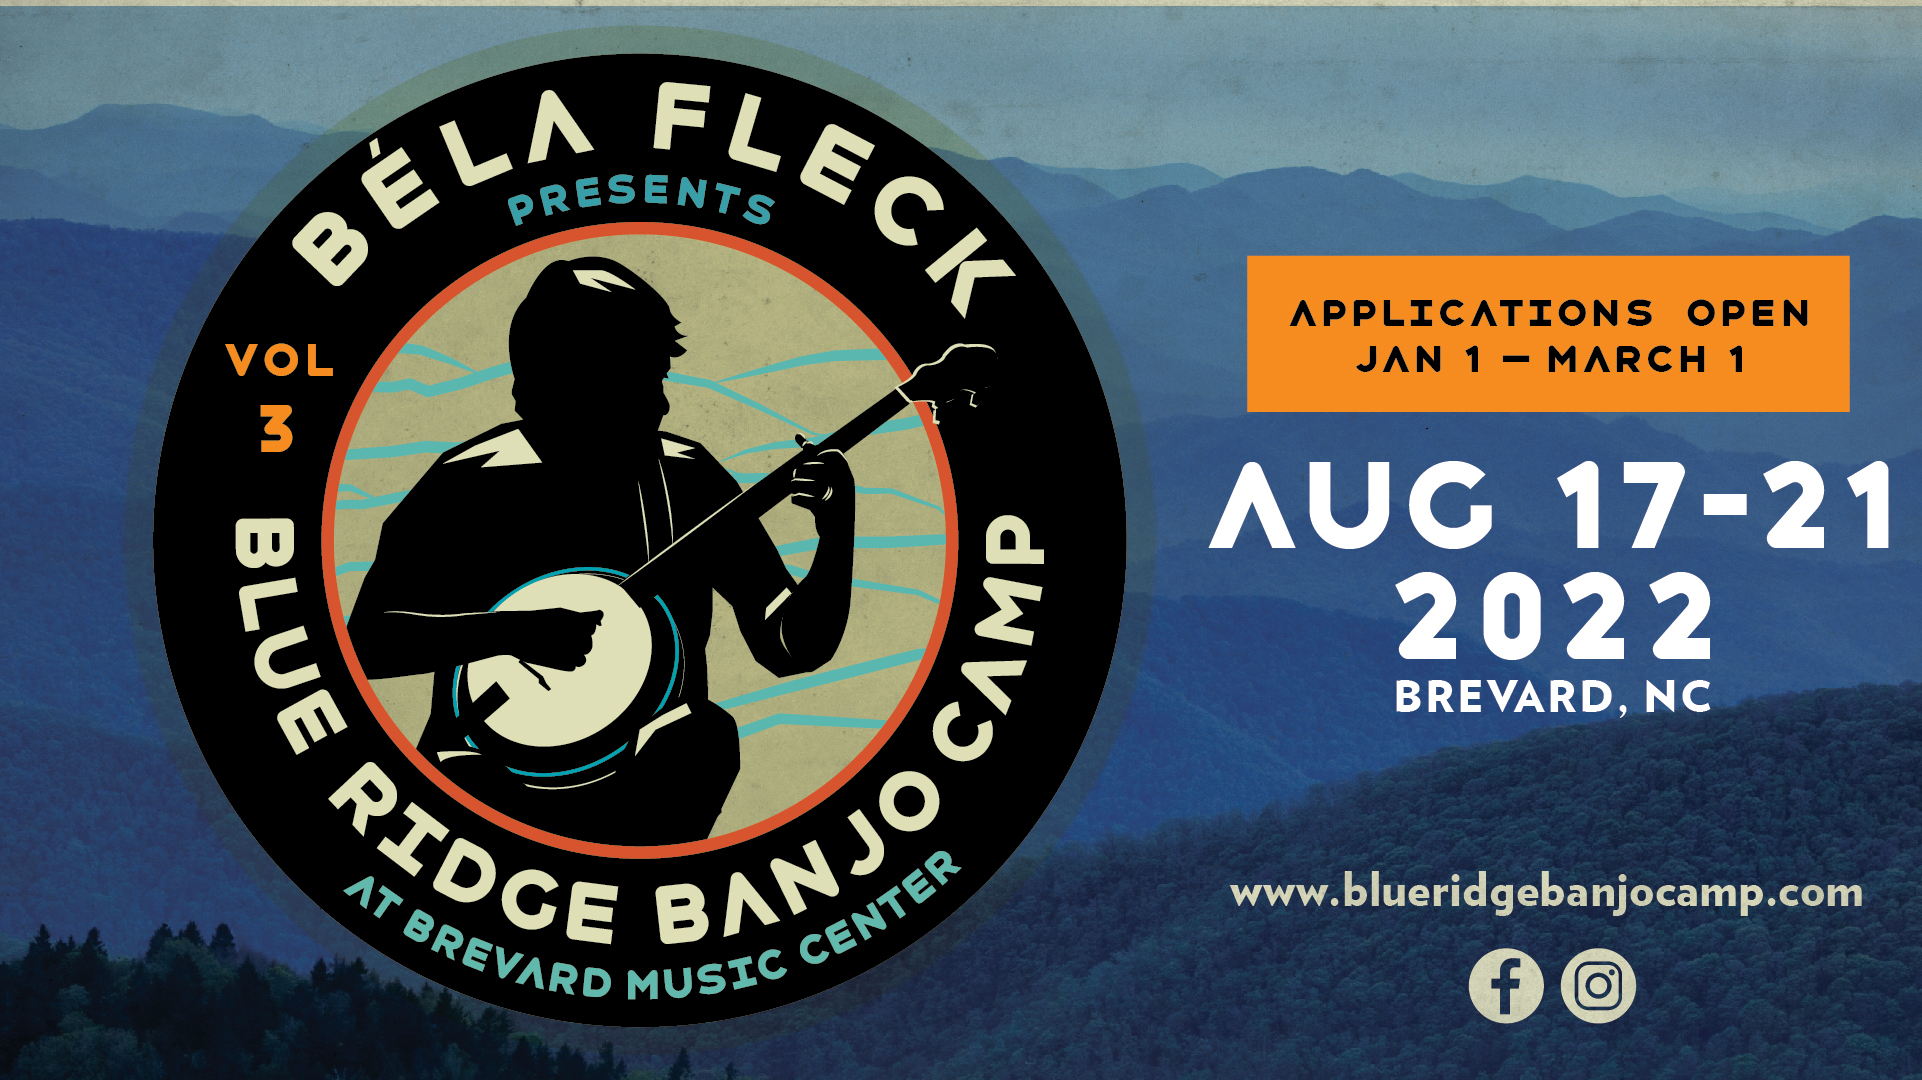 BÉLA FLECK Announces 3rd Annual BLUE RIDGE BANJO CAMP at Brevard Music Center this Summer